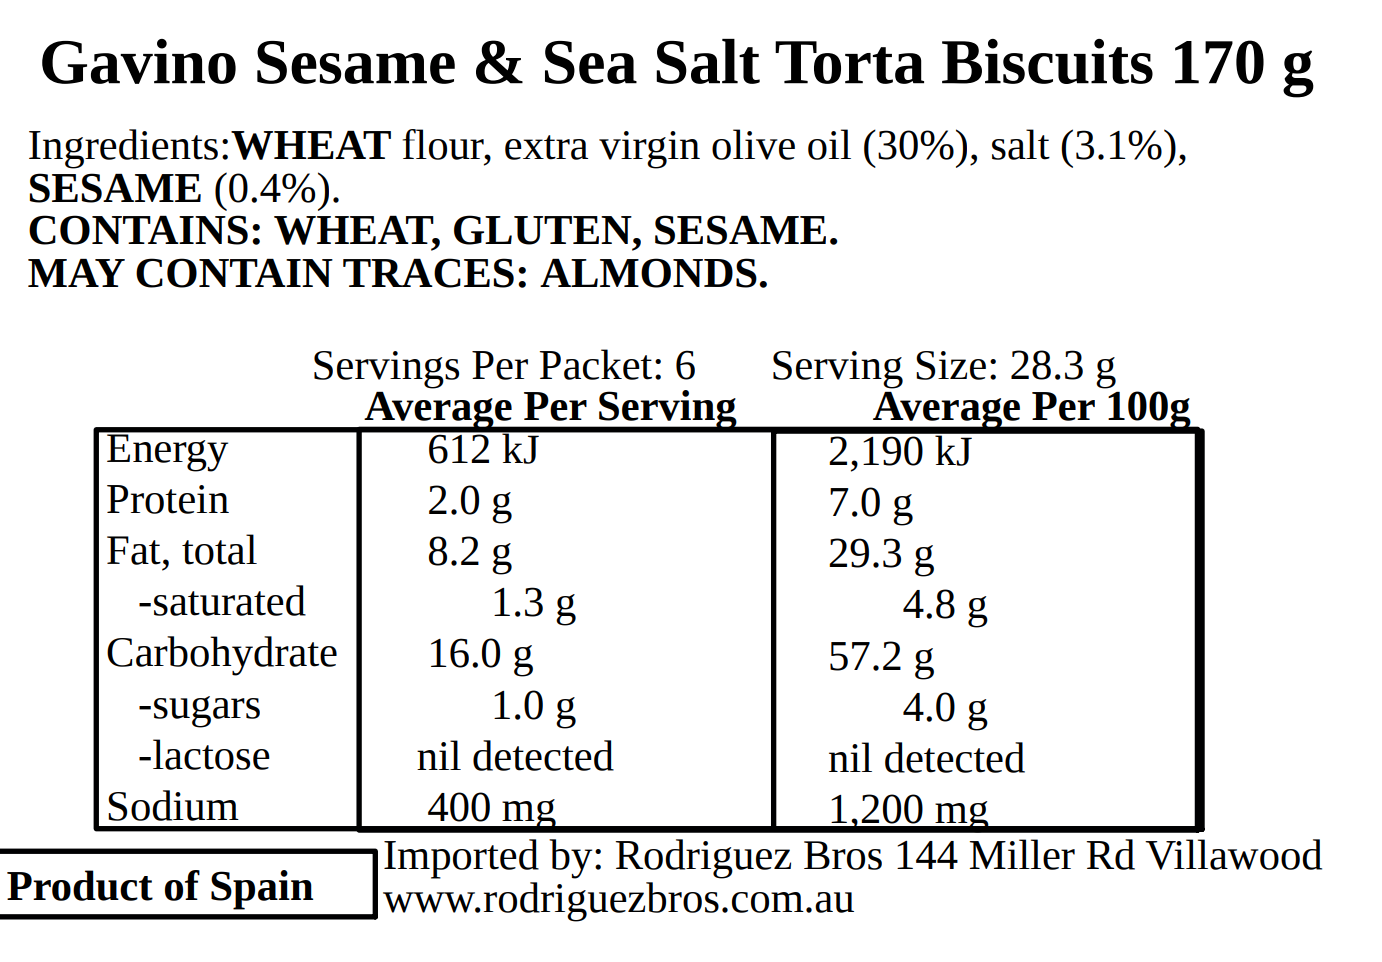 Andres Gavino Sesame and Sea Salt Tortas 170g Best Before March 2024